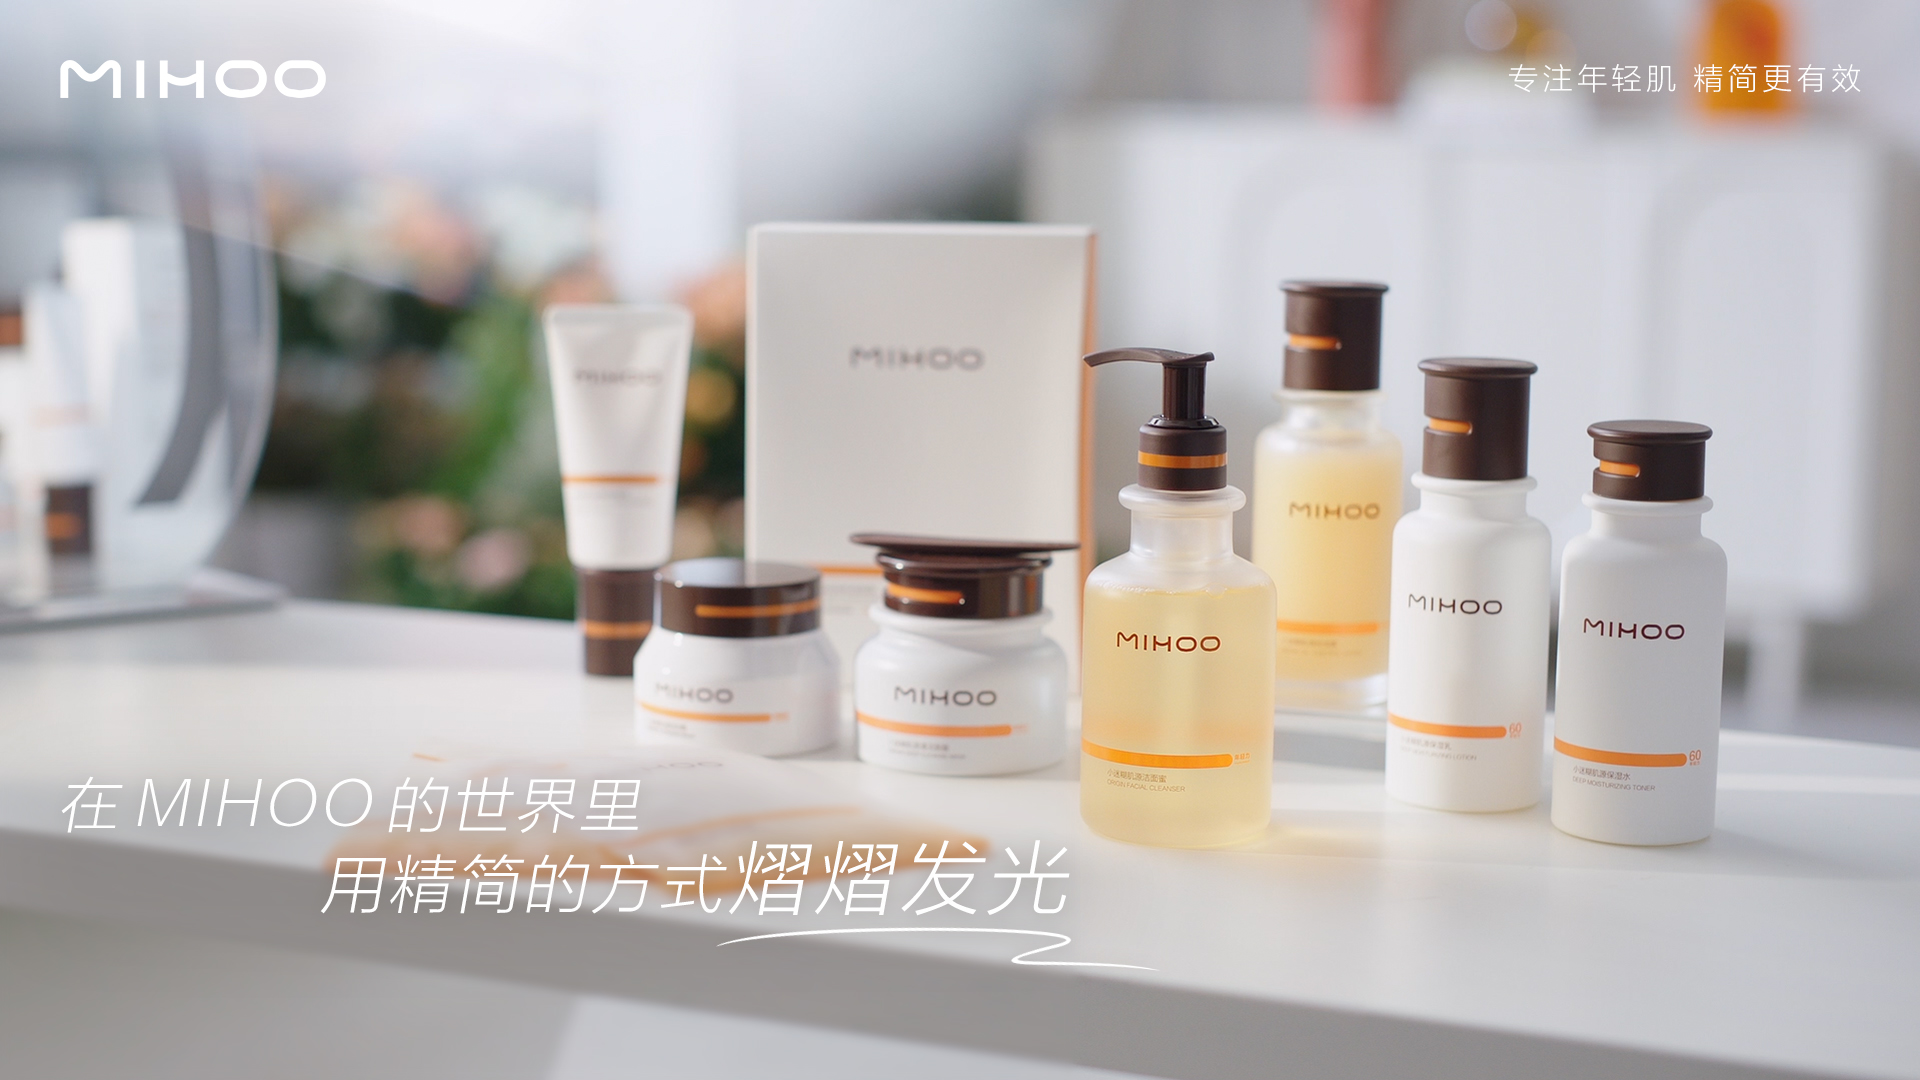 MIHOO小迷糊，定位精简主义高效护肤品牌，品牌slogan：专研精简，高效维稳。